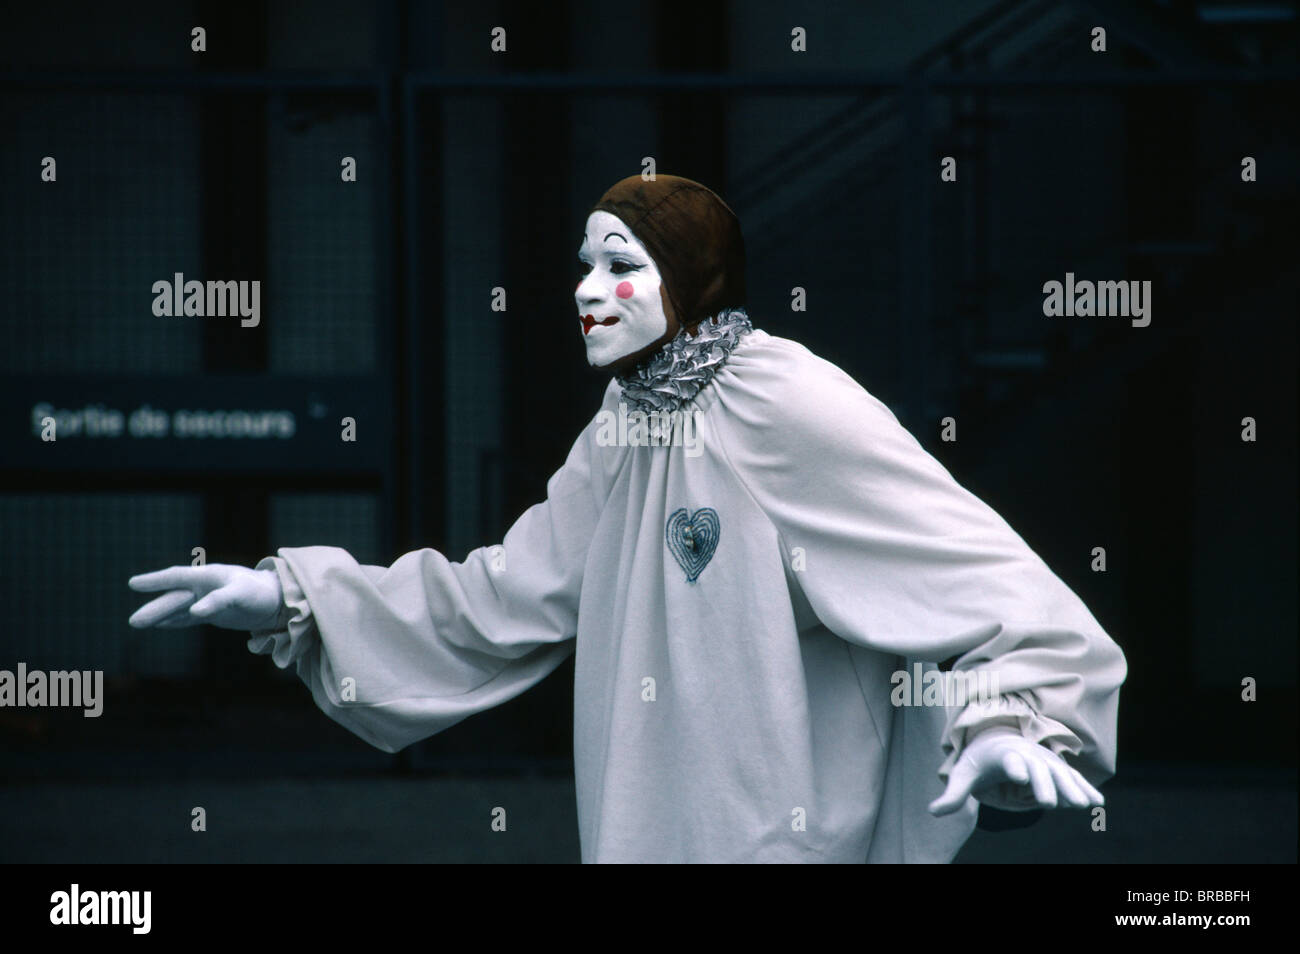 France Ile de France Paris George Pompidou Centre in Les Halles Beauborg Mime Artist Dressed As A Pierrot Clown Performing Stock Photo